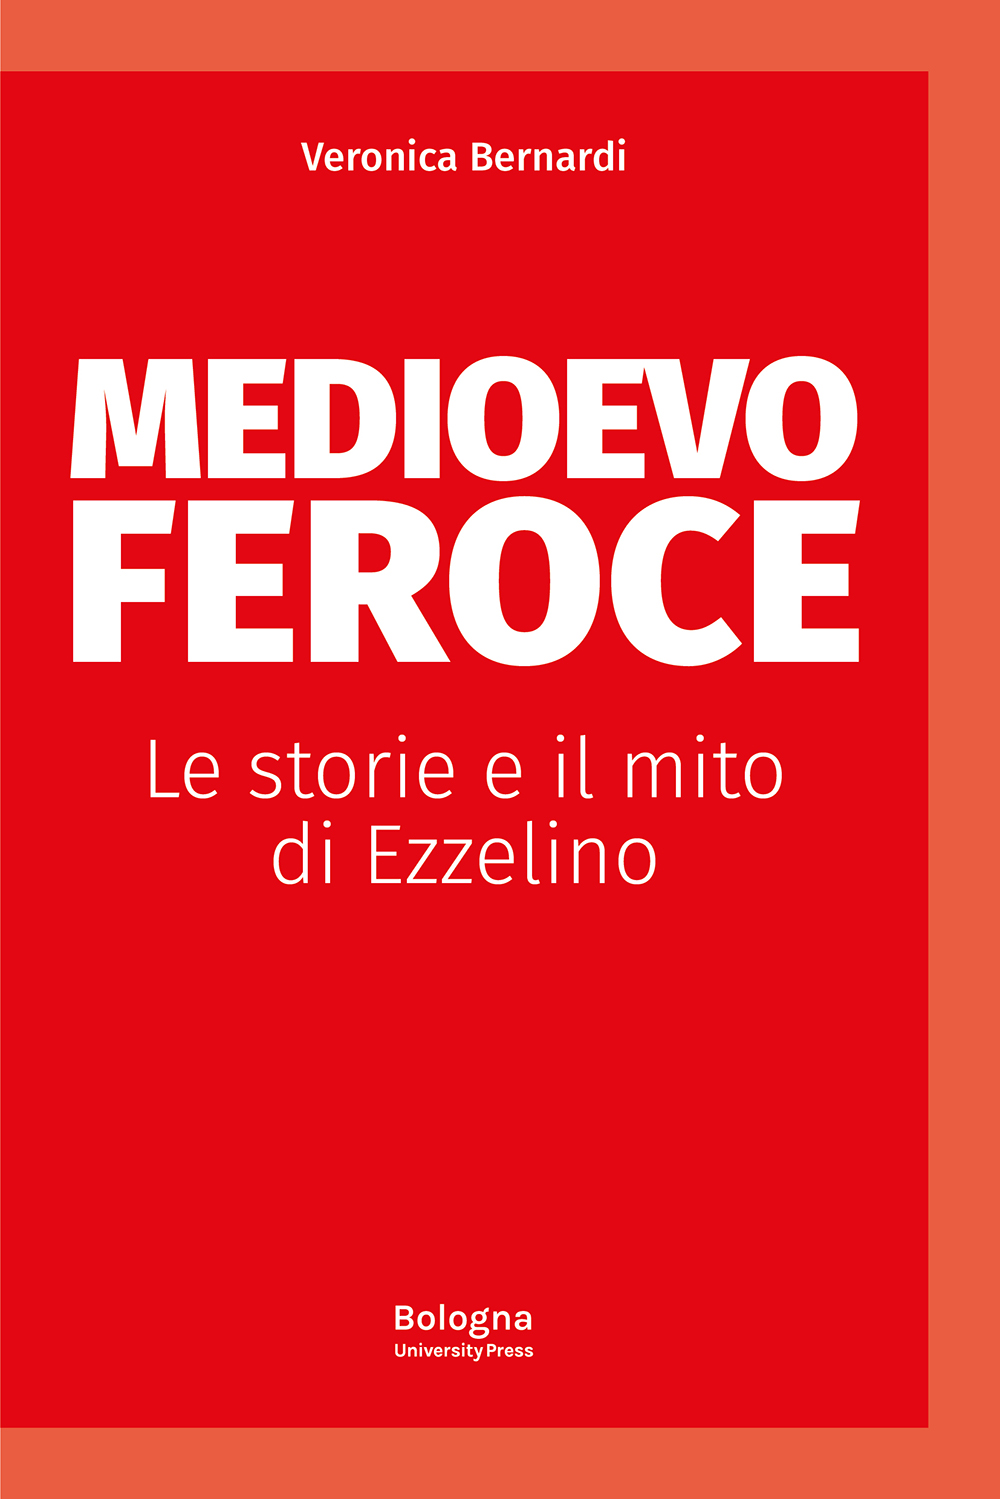 Medioevo feroce - Bologna University Press